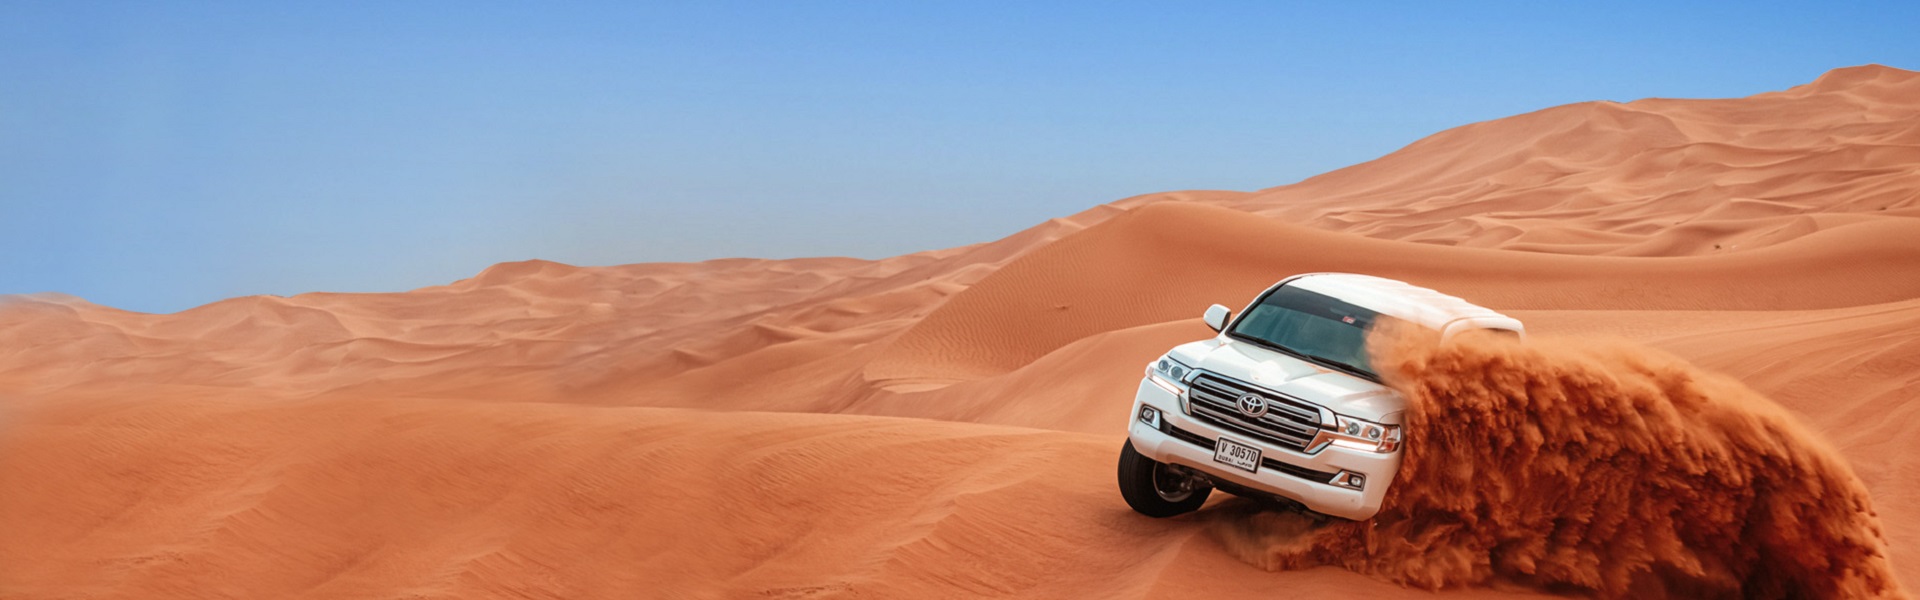 Car rental Kraljevo | Desert safari in Dubai